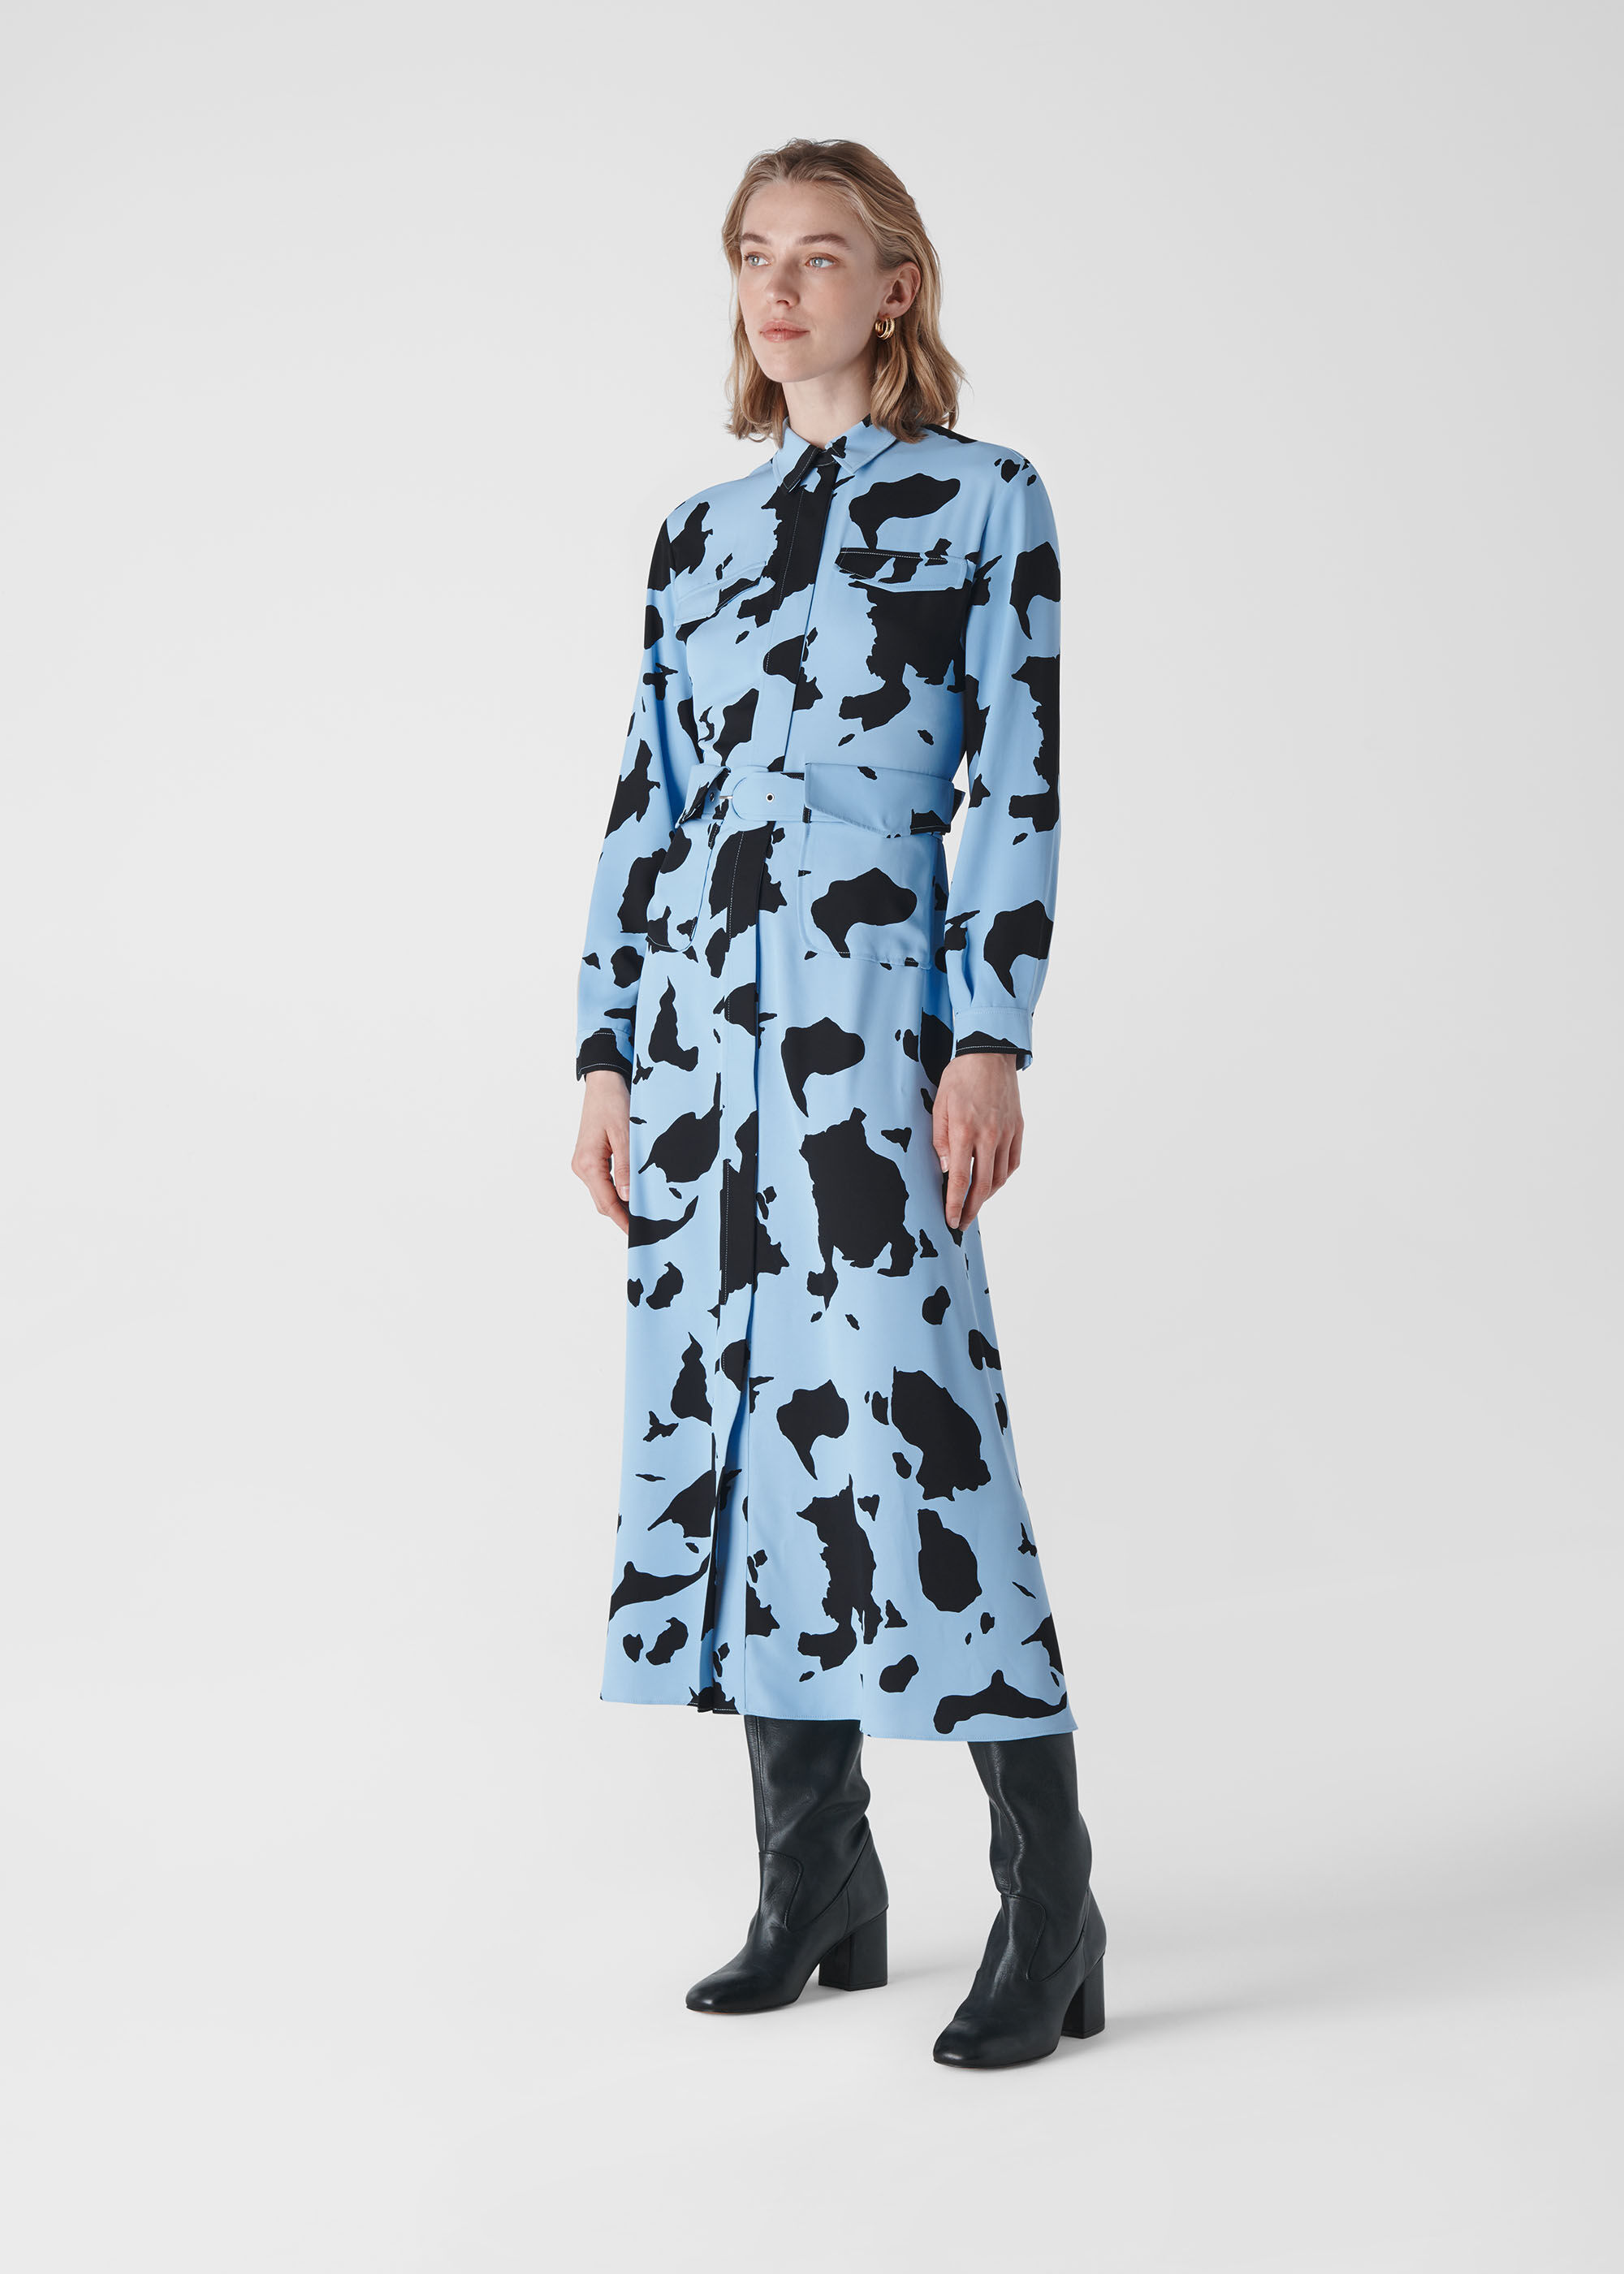 cow print dress